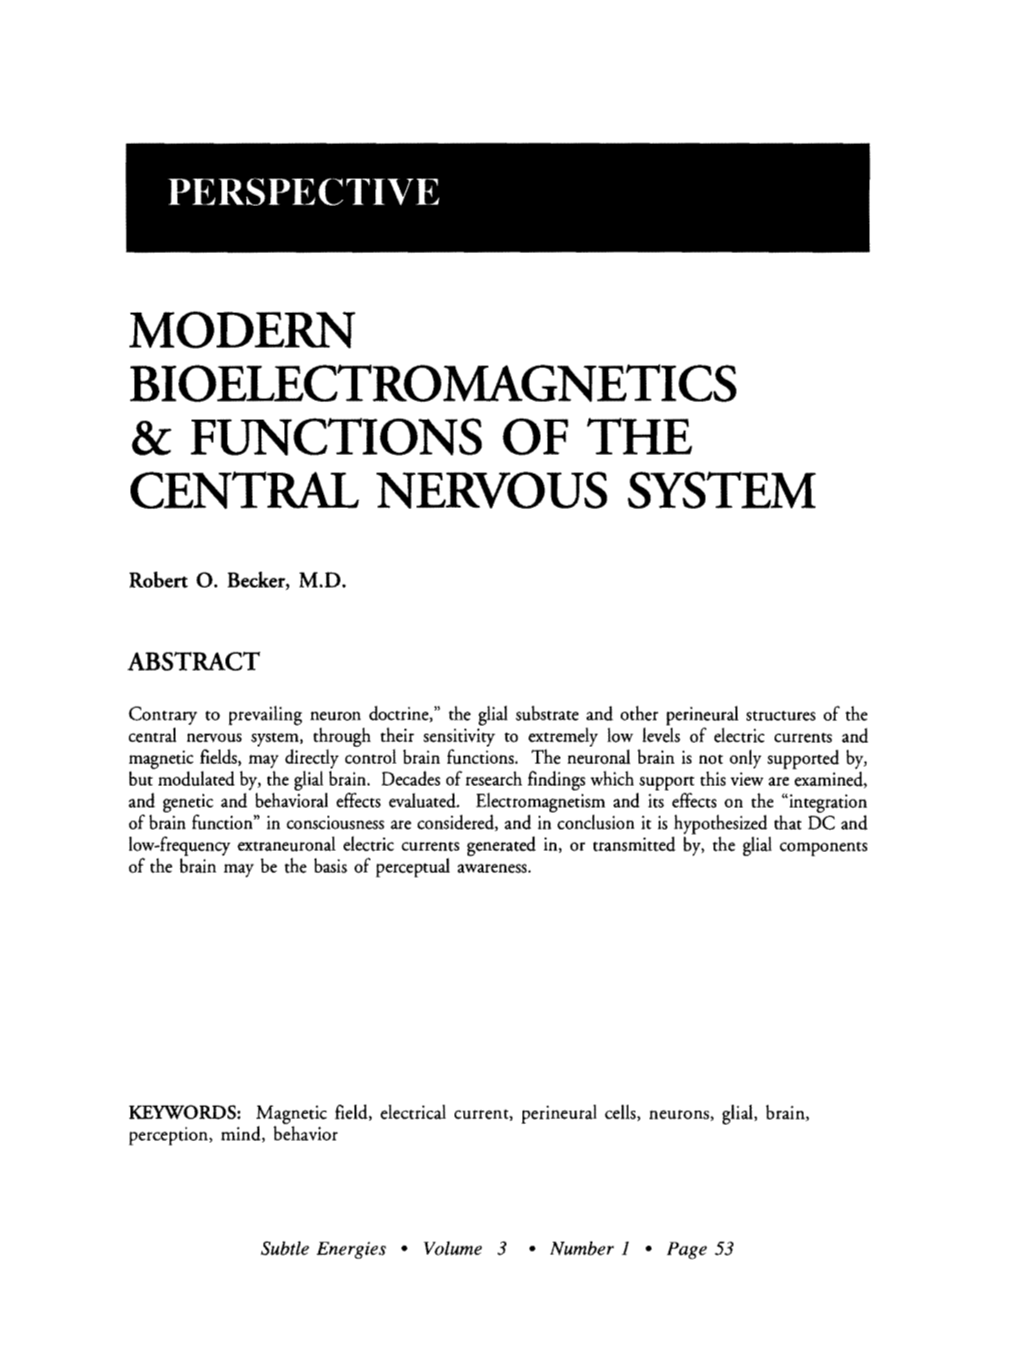 Modern Bioelectromagnetics & Functions of the Central Nervous System